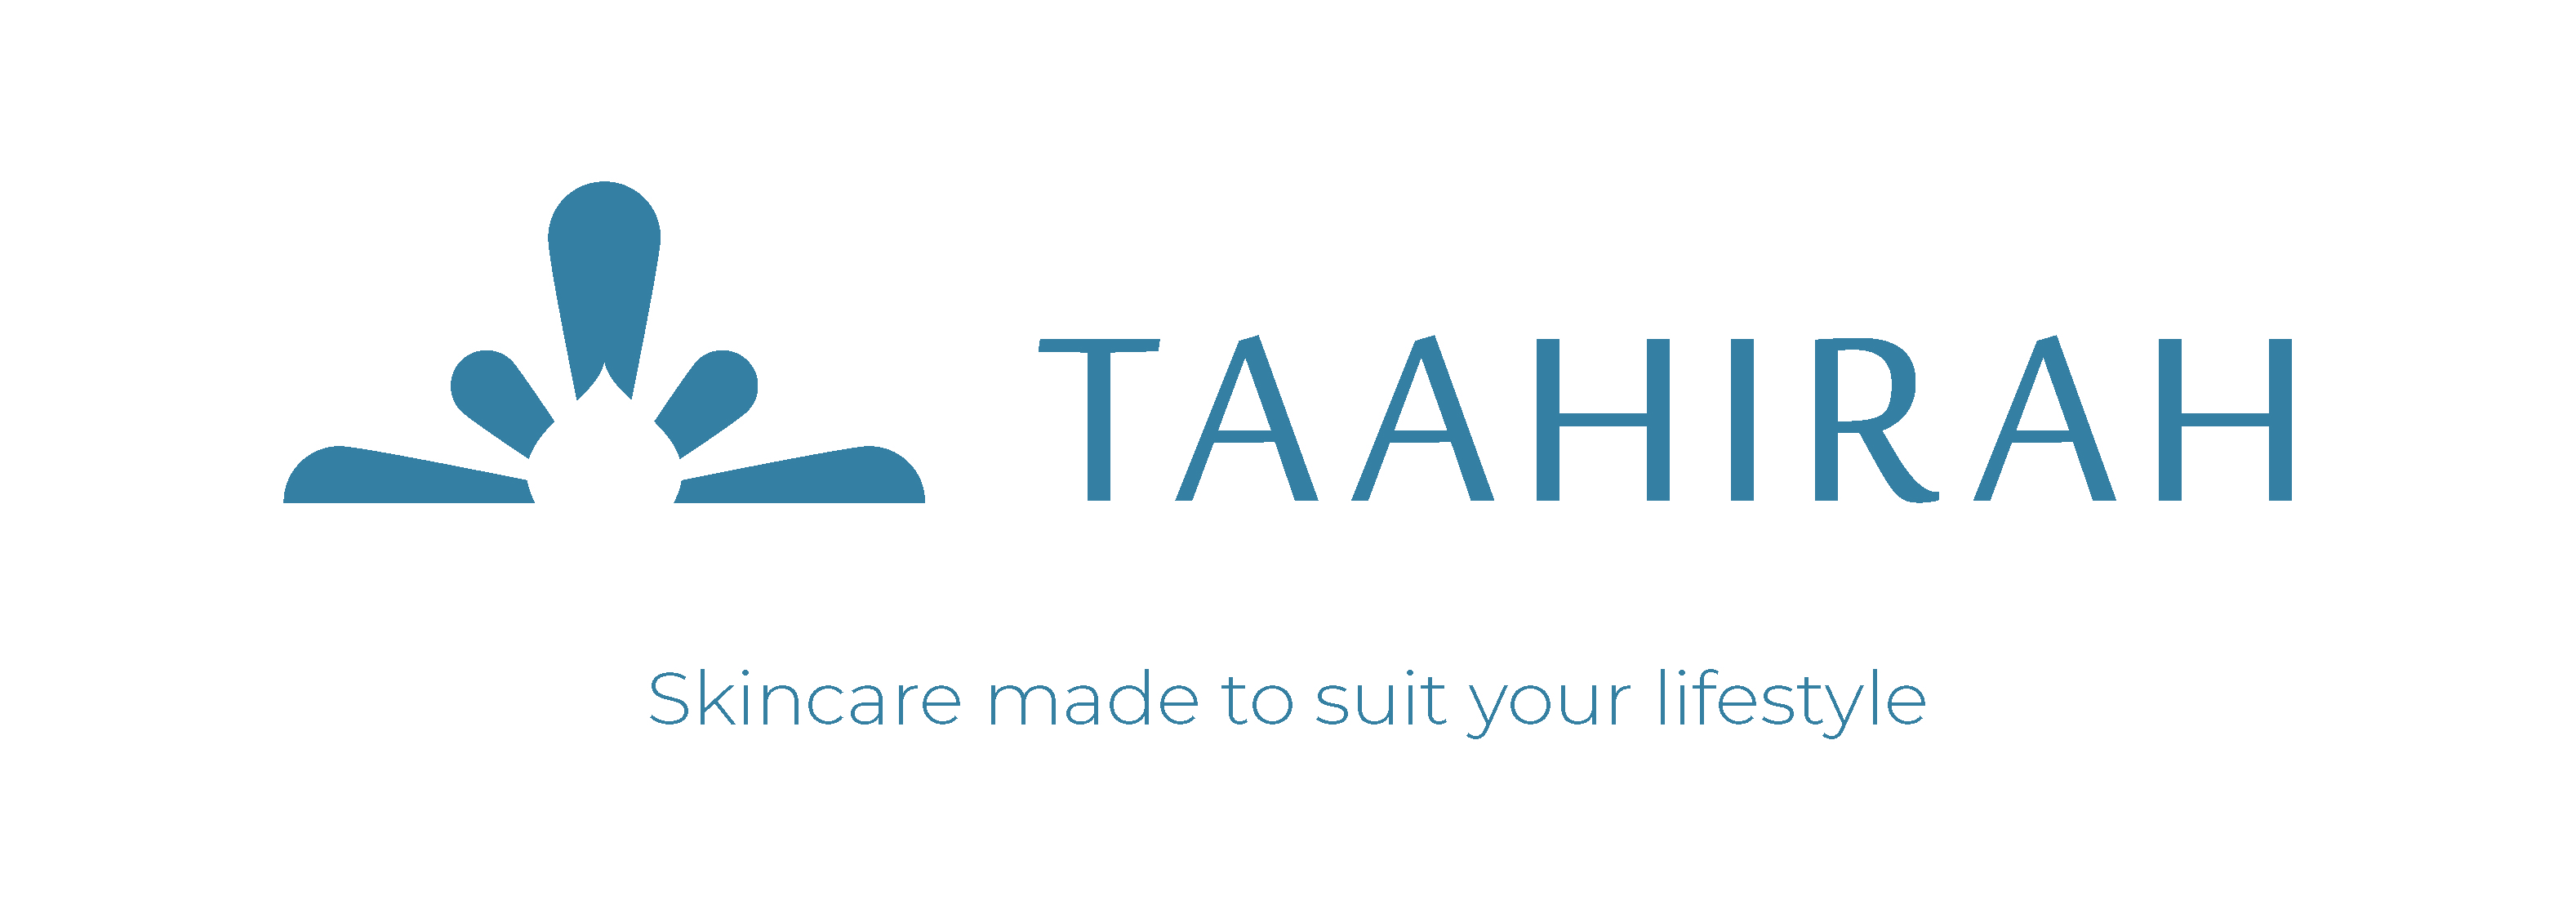 Taahirah Skin Care.